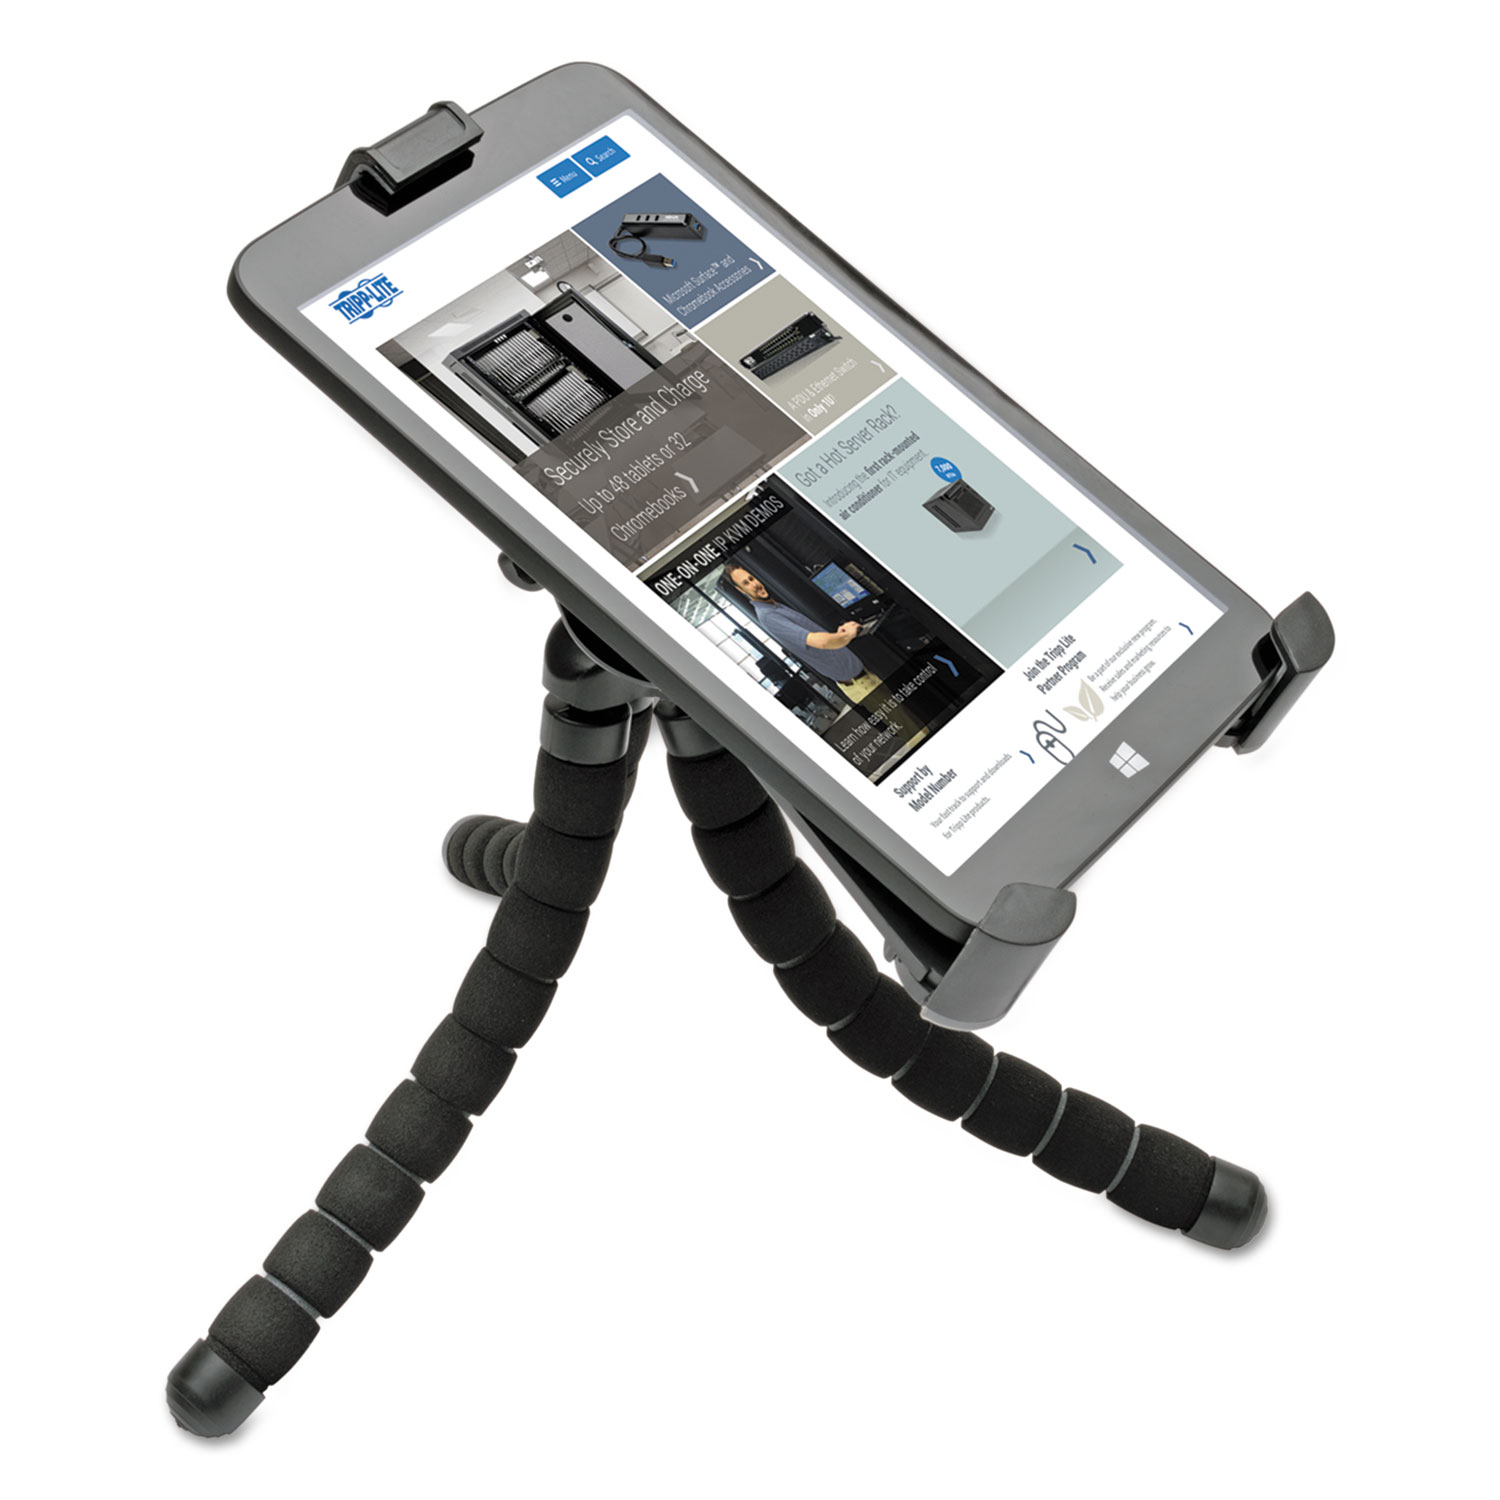 Full-Motion Universal Flexible Tablet Stand, 8 1/4 x 8 1/4 x 8, Black